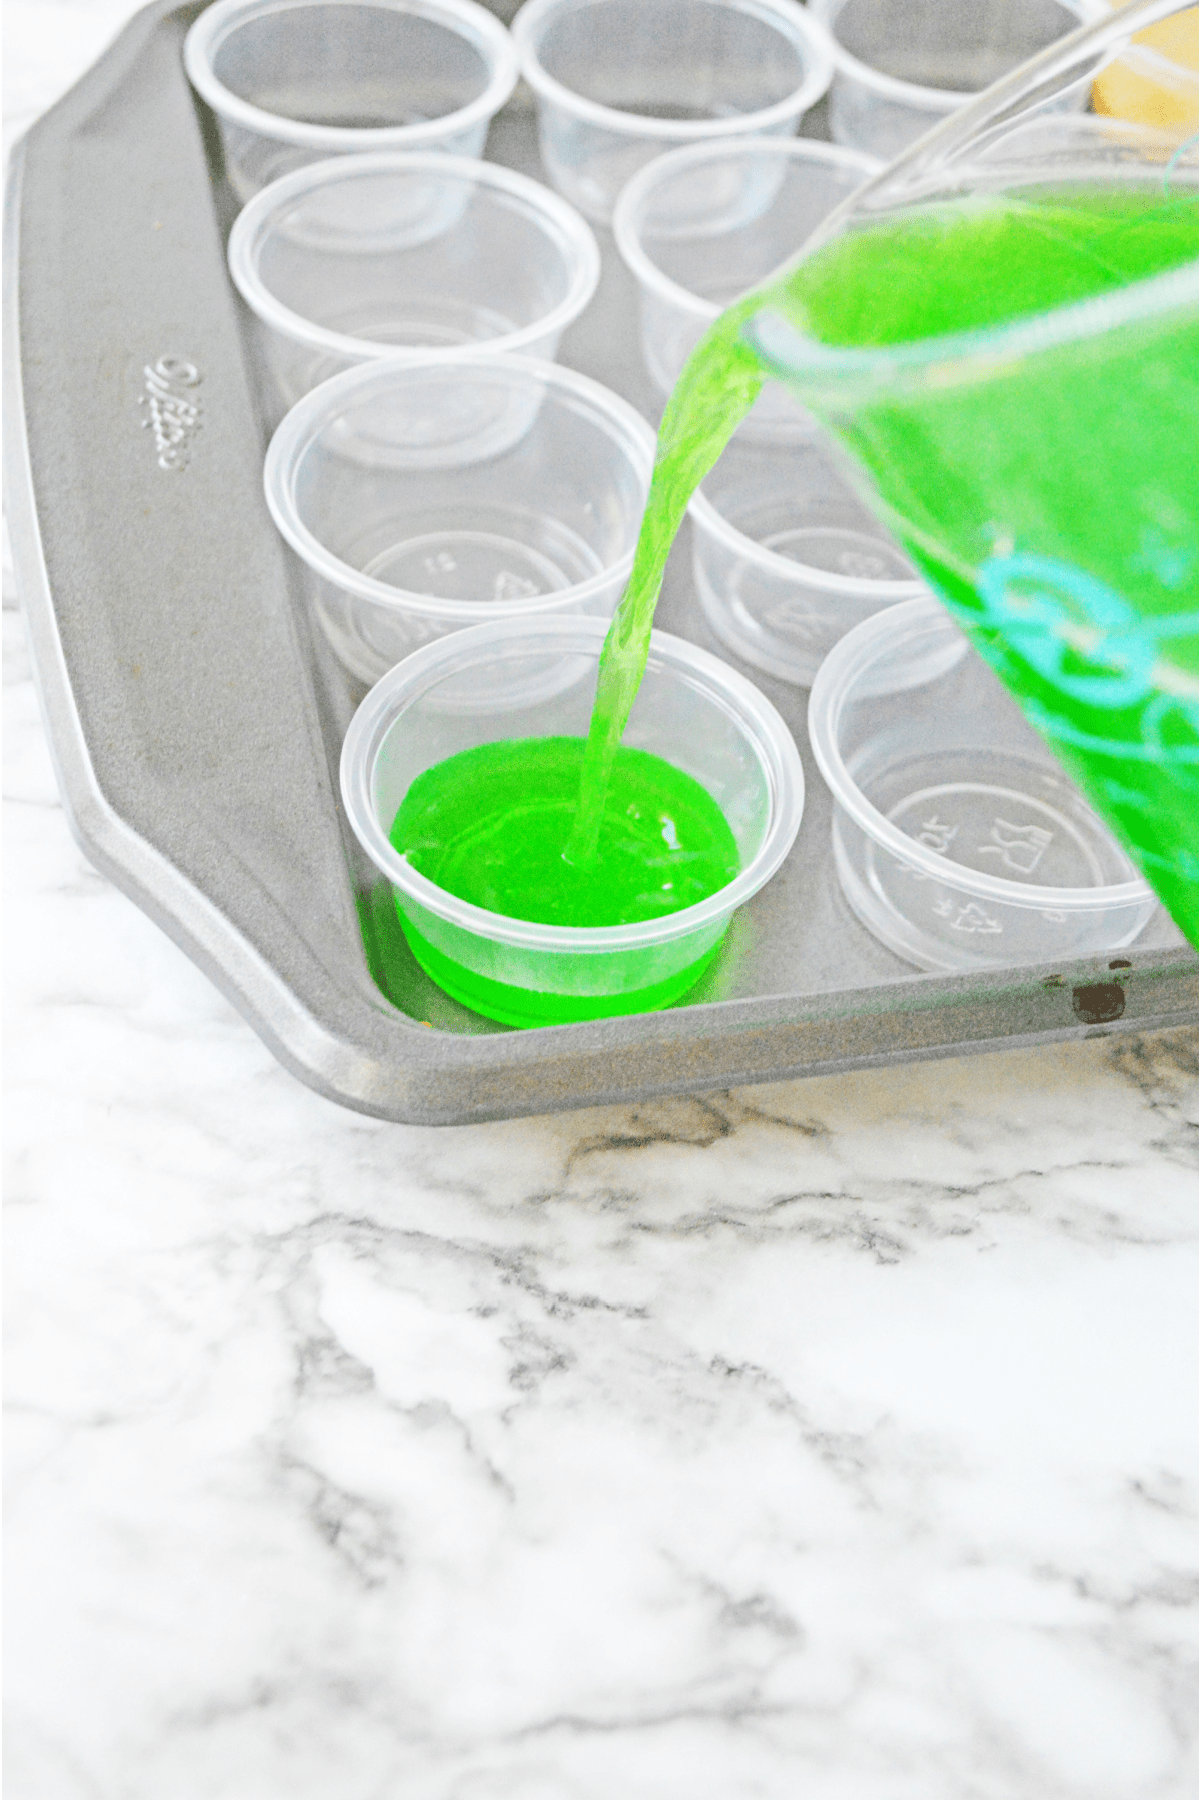 Pouring jello mixture into plastic cups